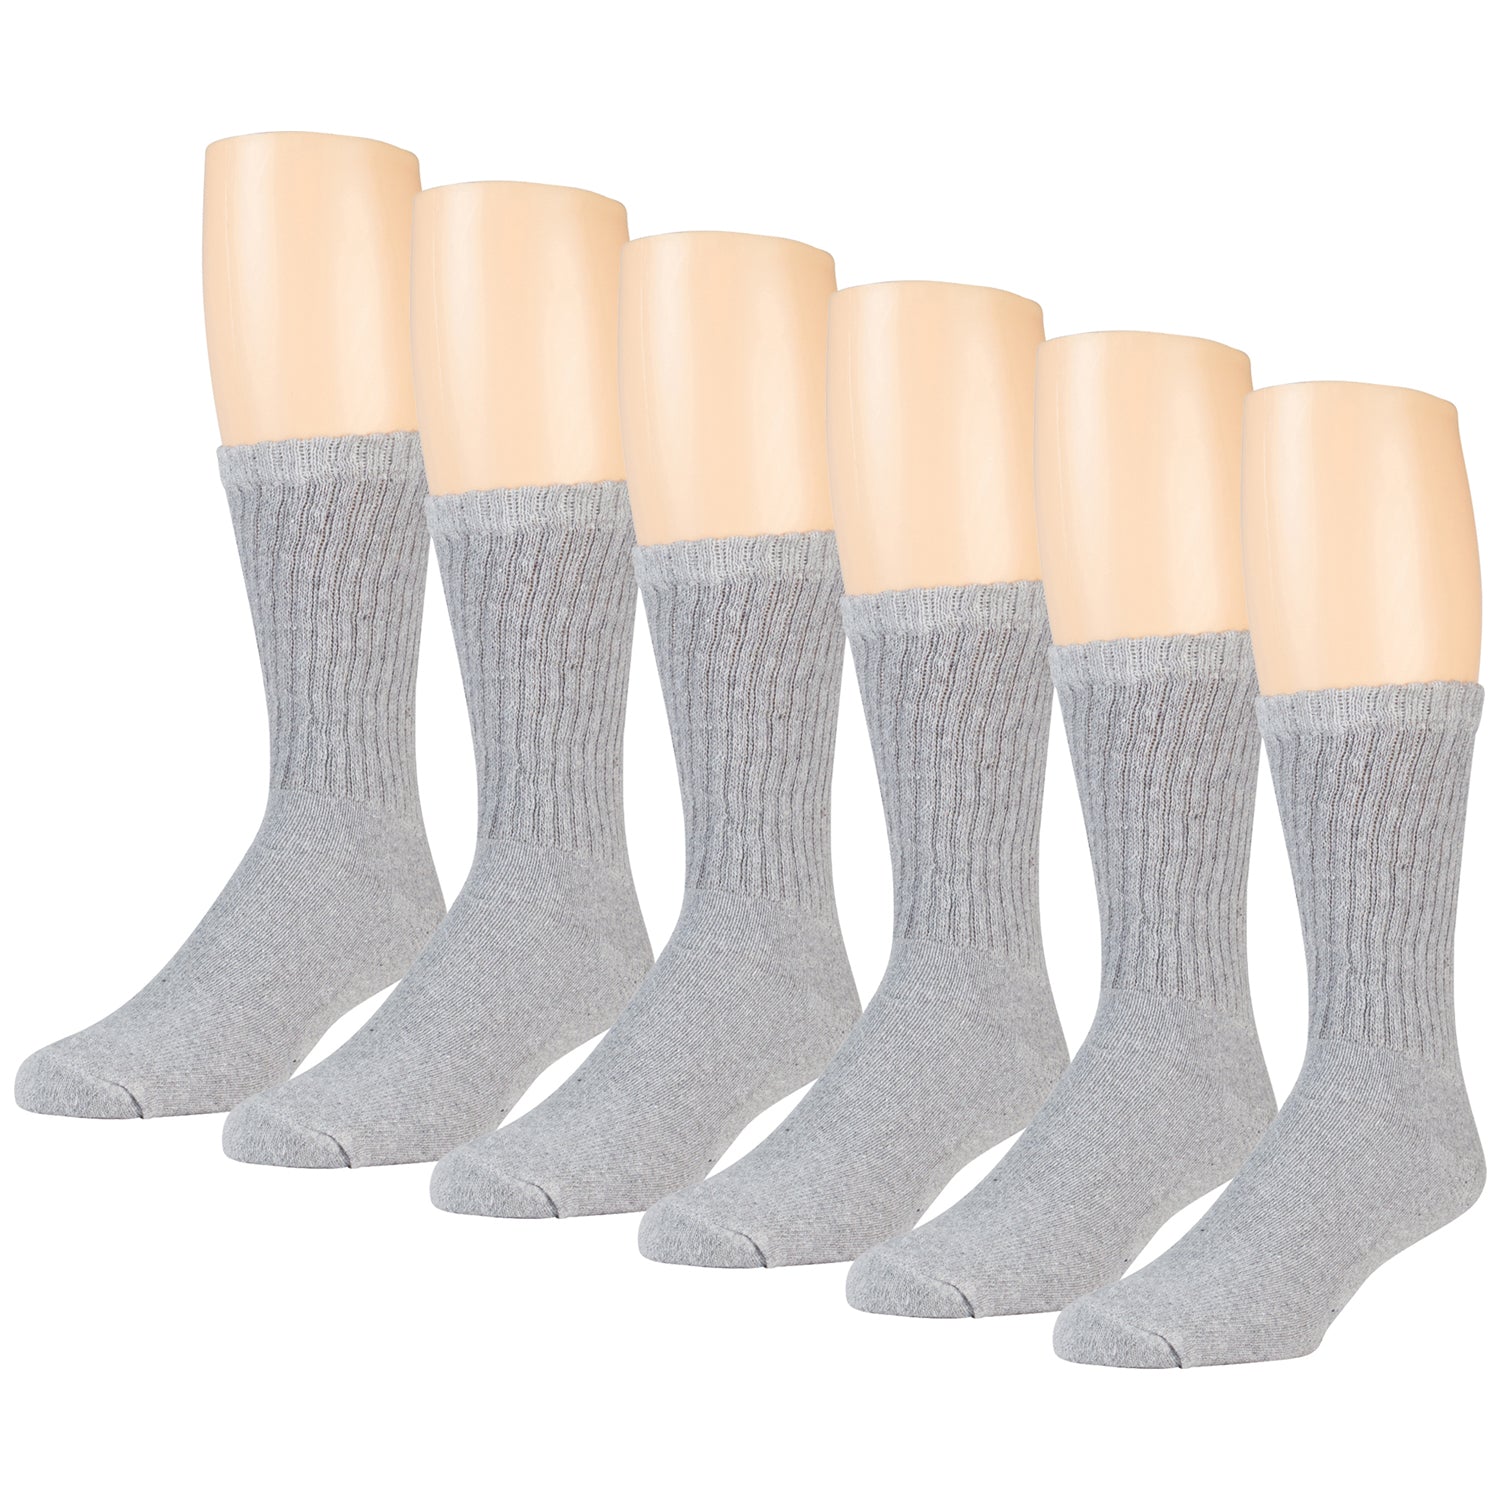 Men's Cotton Athletic Crew Sports Socks, Size 10-13